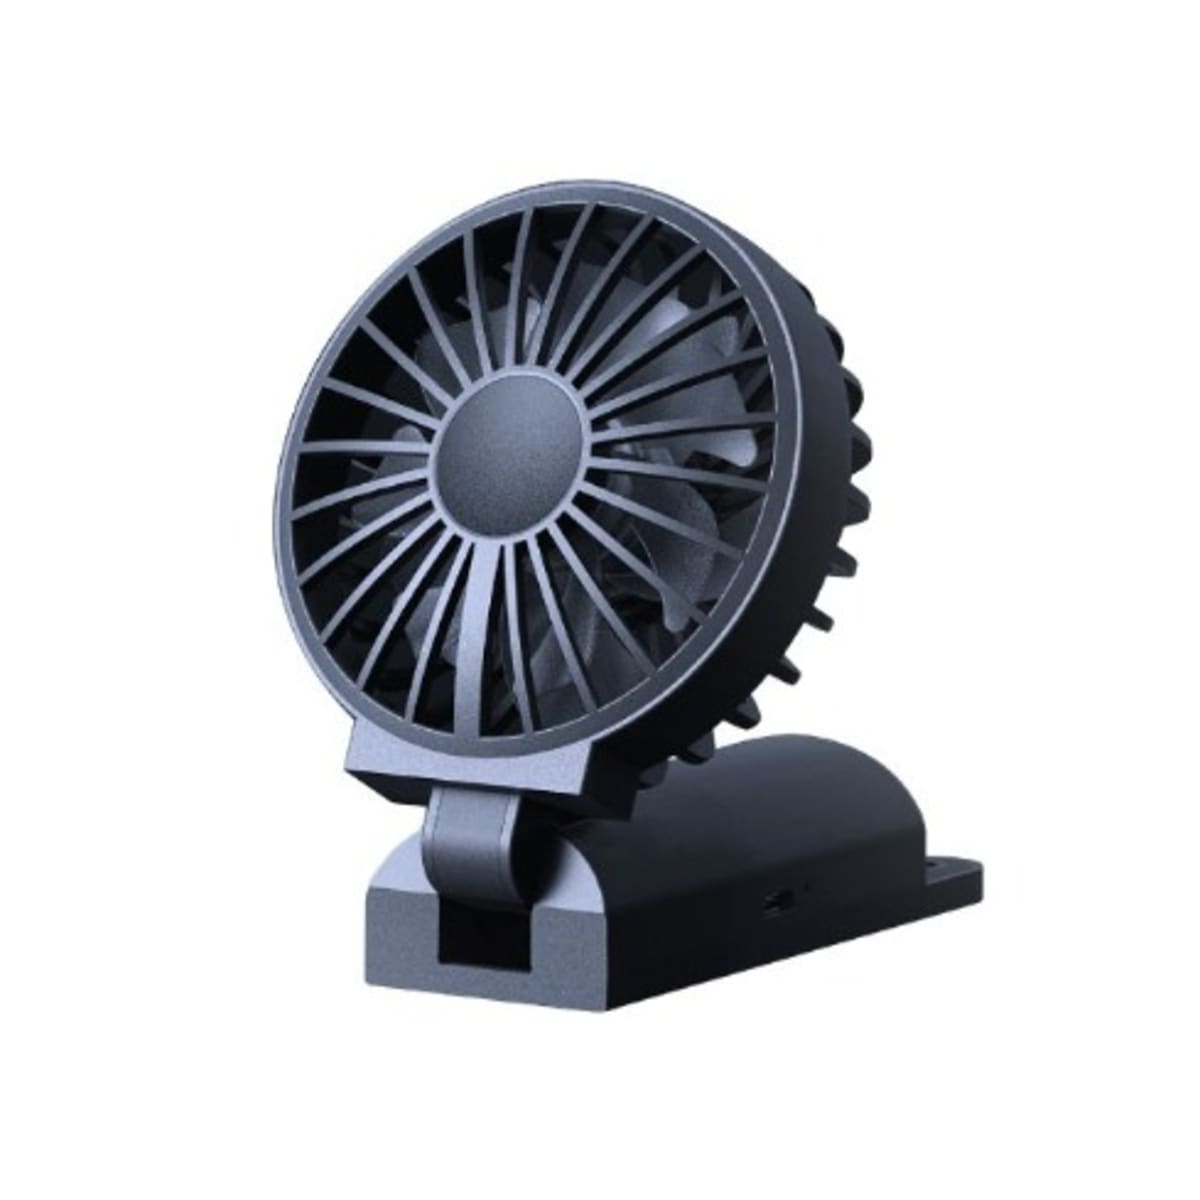 Oraimo Adjustable Speed Fodable Handheld Smart Control Wind Fan